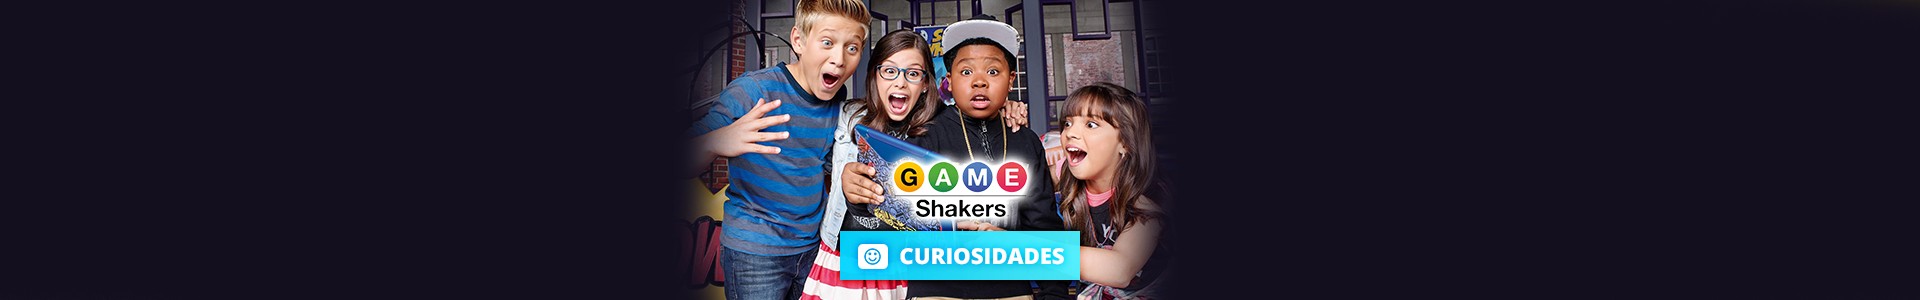 11 Curiosidades sobre Game Shakers a série de games da Nickelodeon